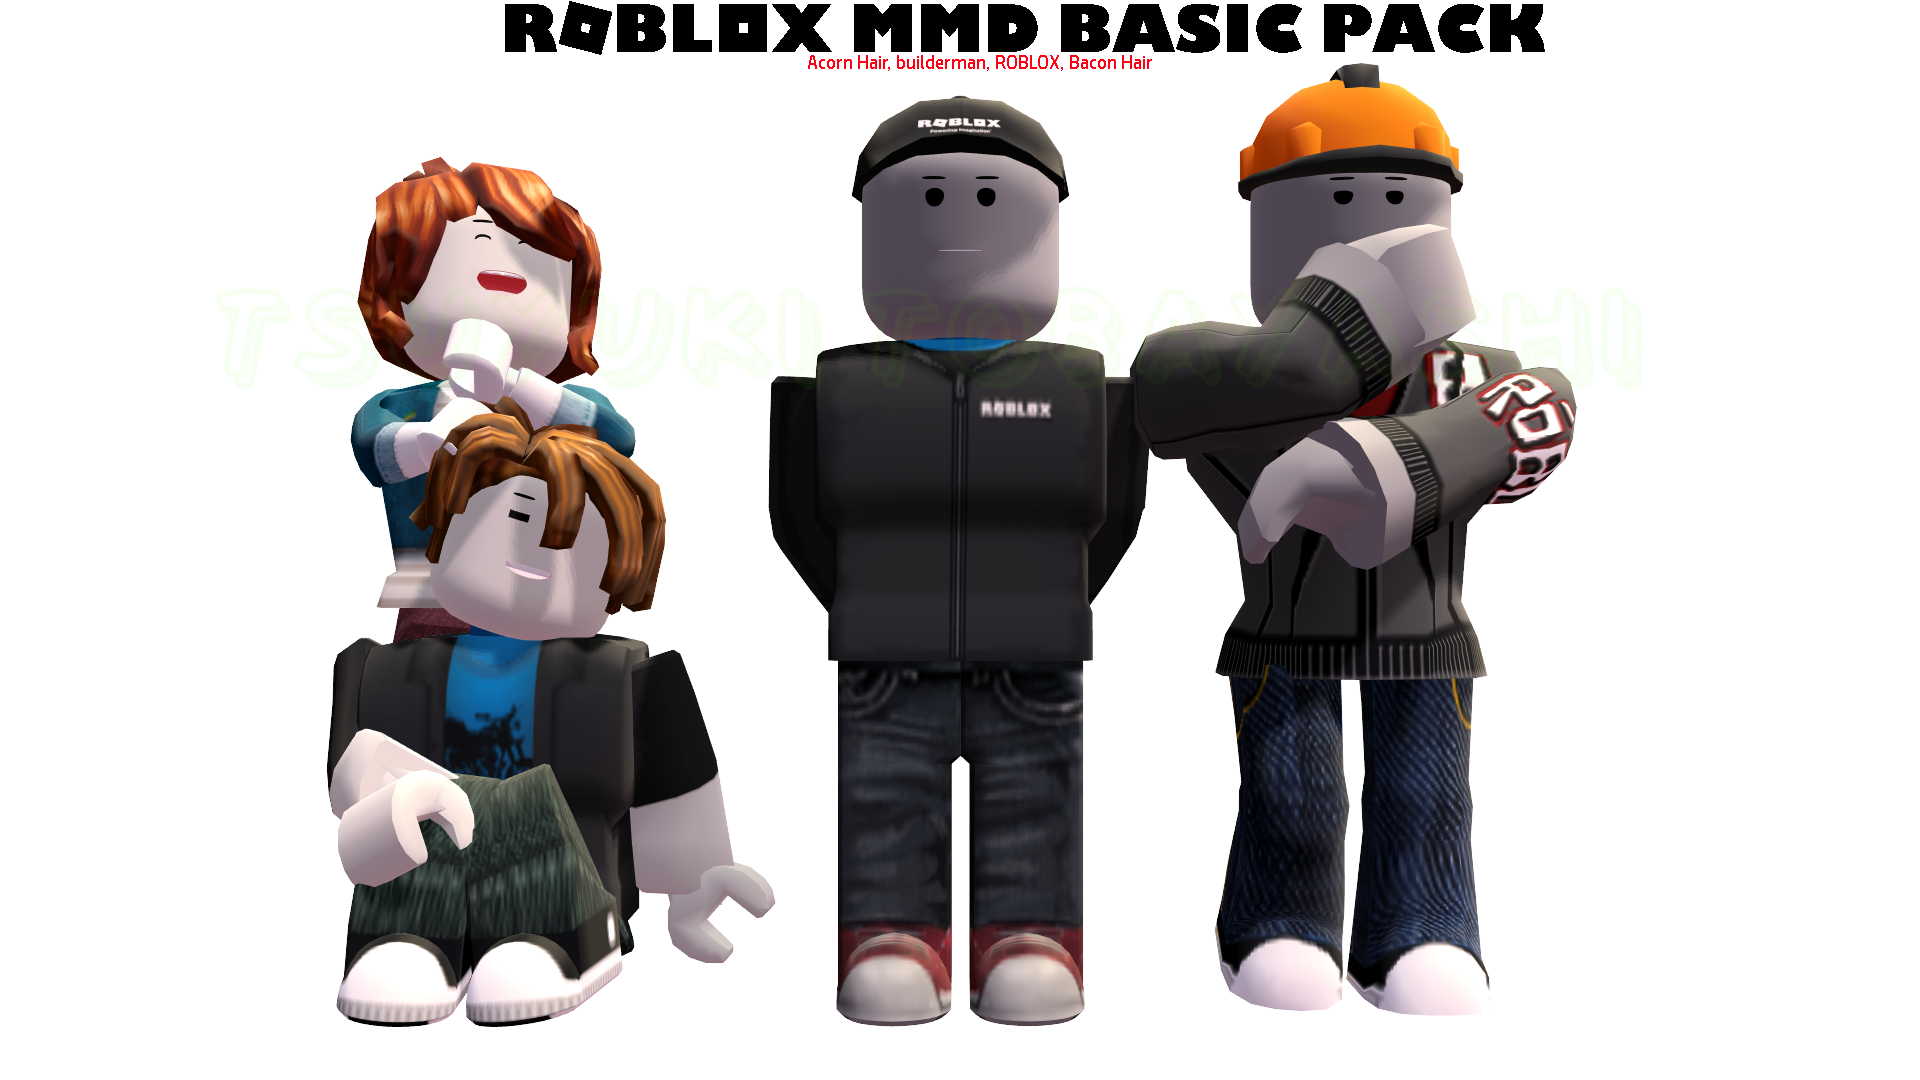 Mmdxroblox Roblox Mmd Basic Pack By Animegamepl On Deviantart - roblox builderman avatar